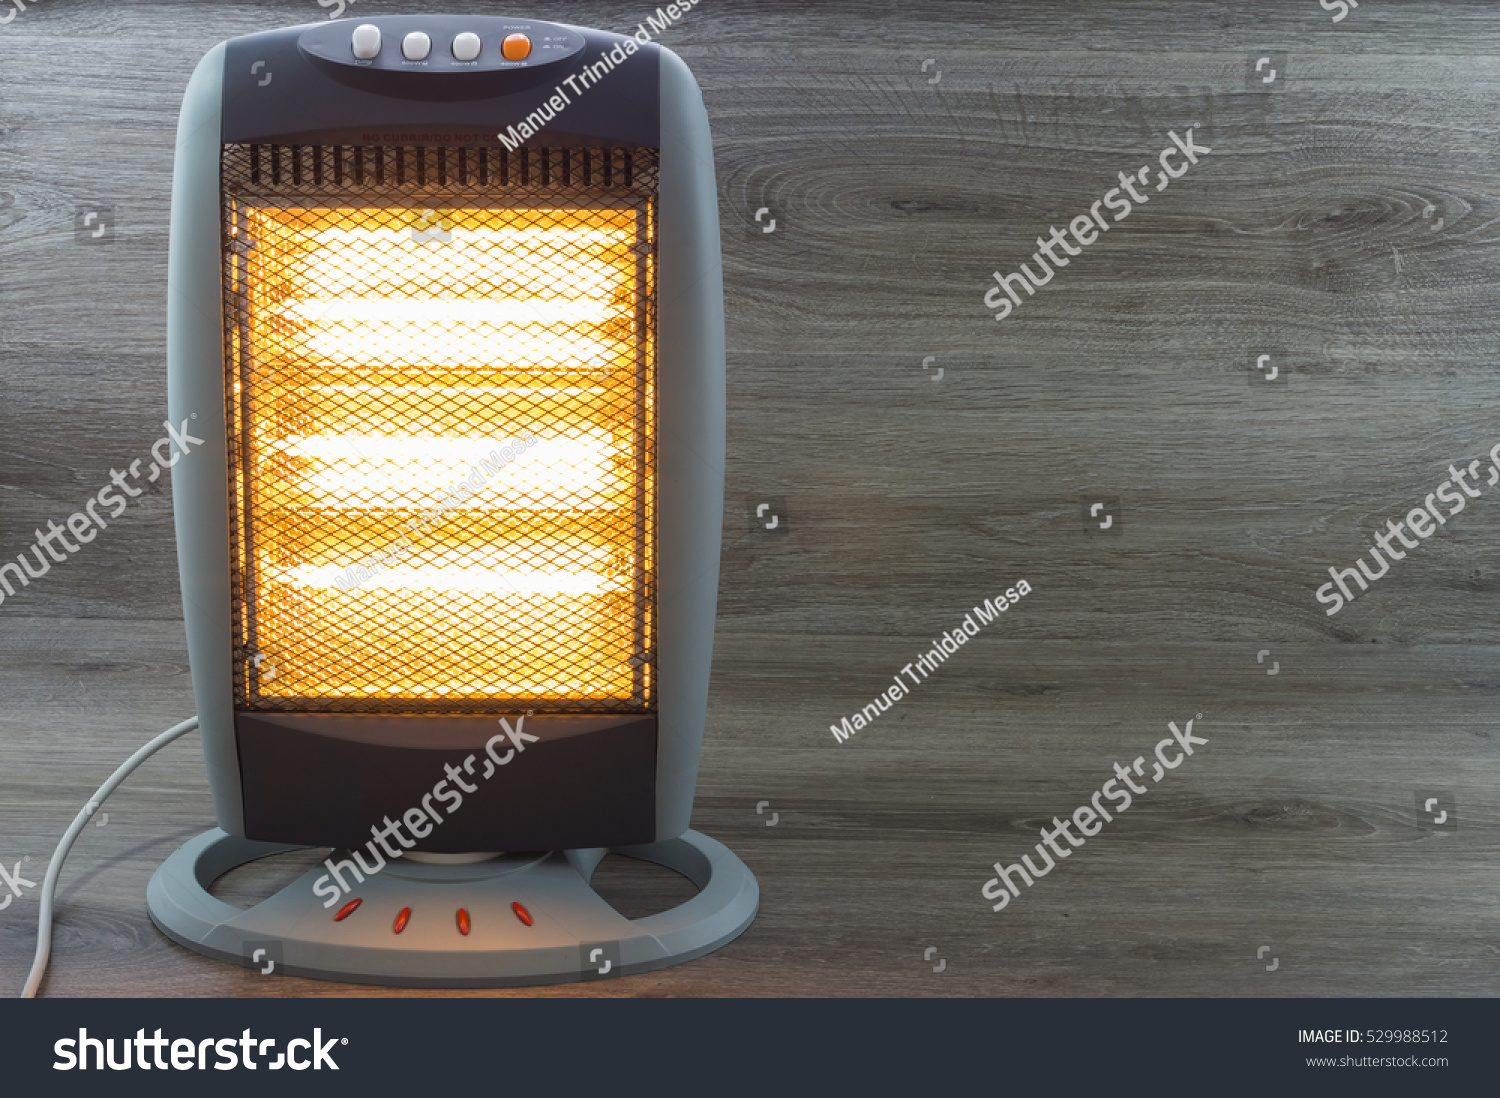 Halogen Electric Stove illuminated and radiating on gray background #529988512